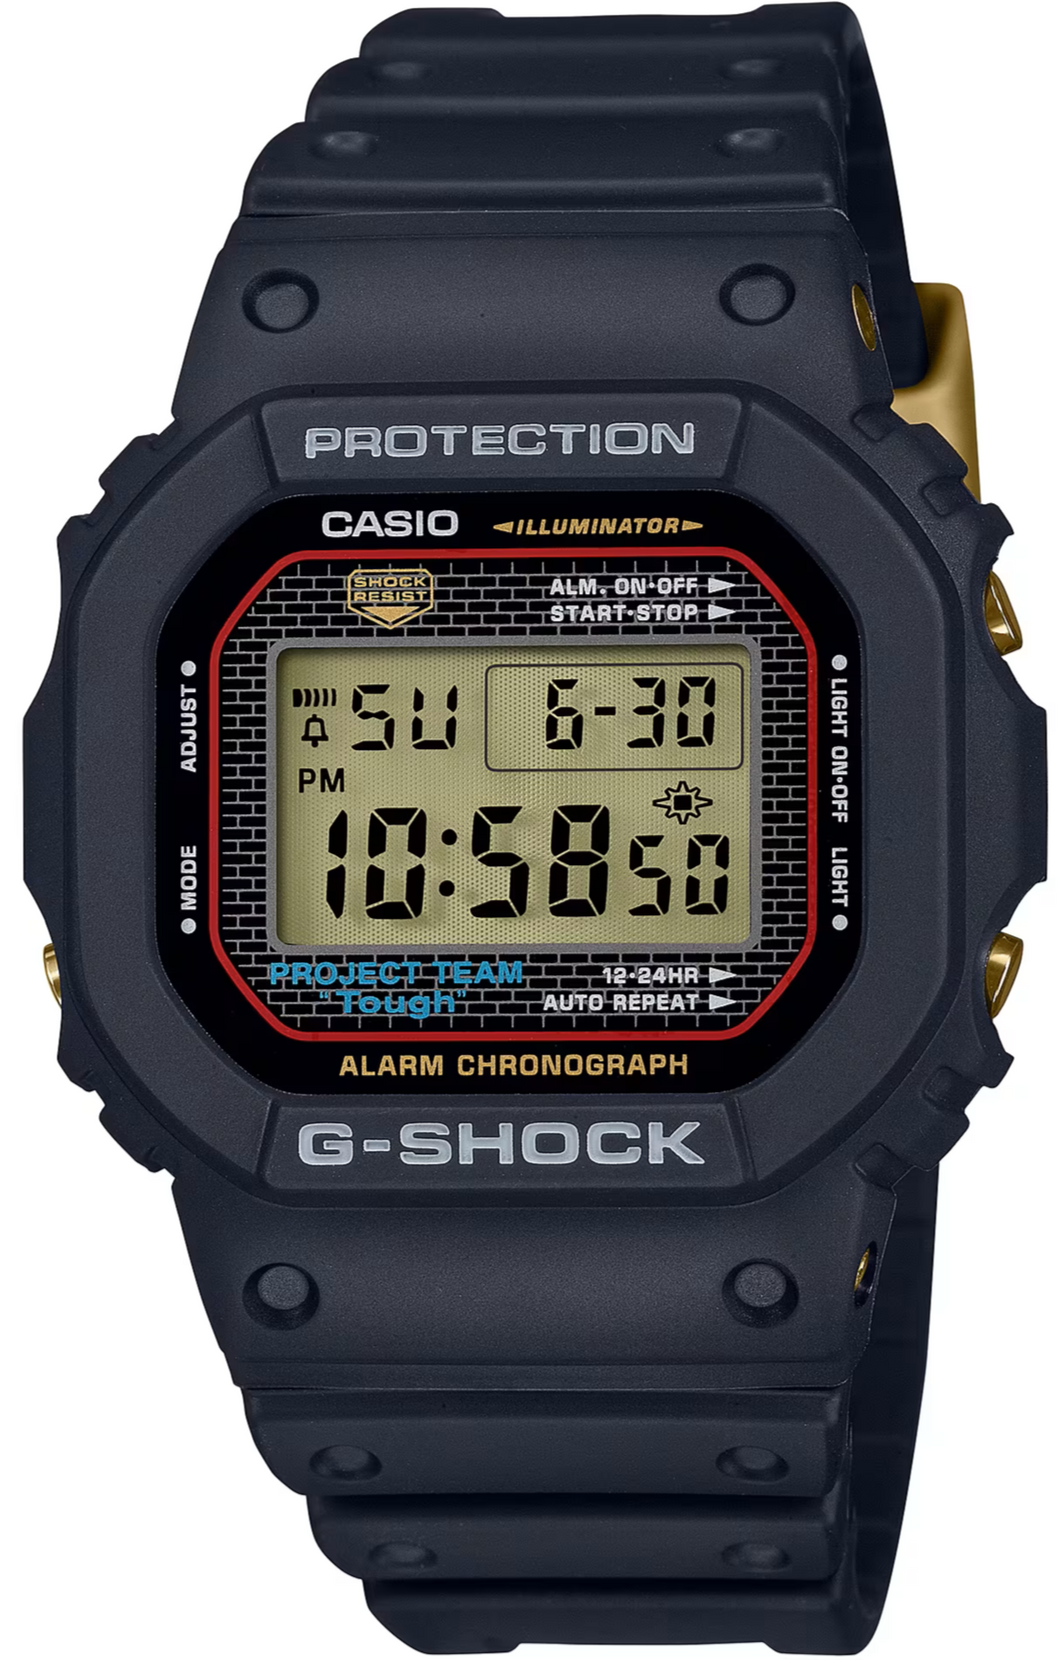 Casio G-Shock 40th Anniversary Origin Square Face Recrystallized Limited Model DW-5040PG-1 www.watchoutz.com